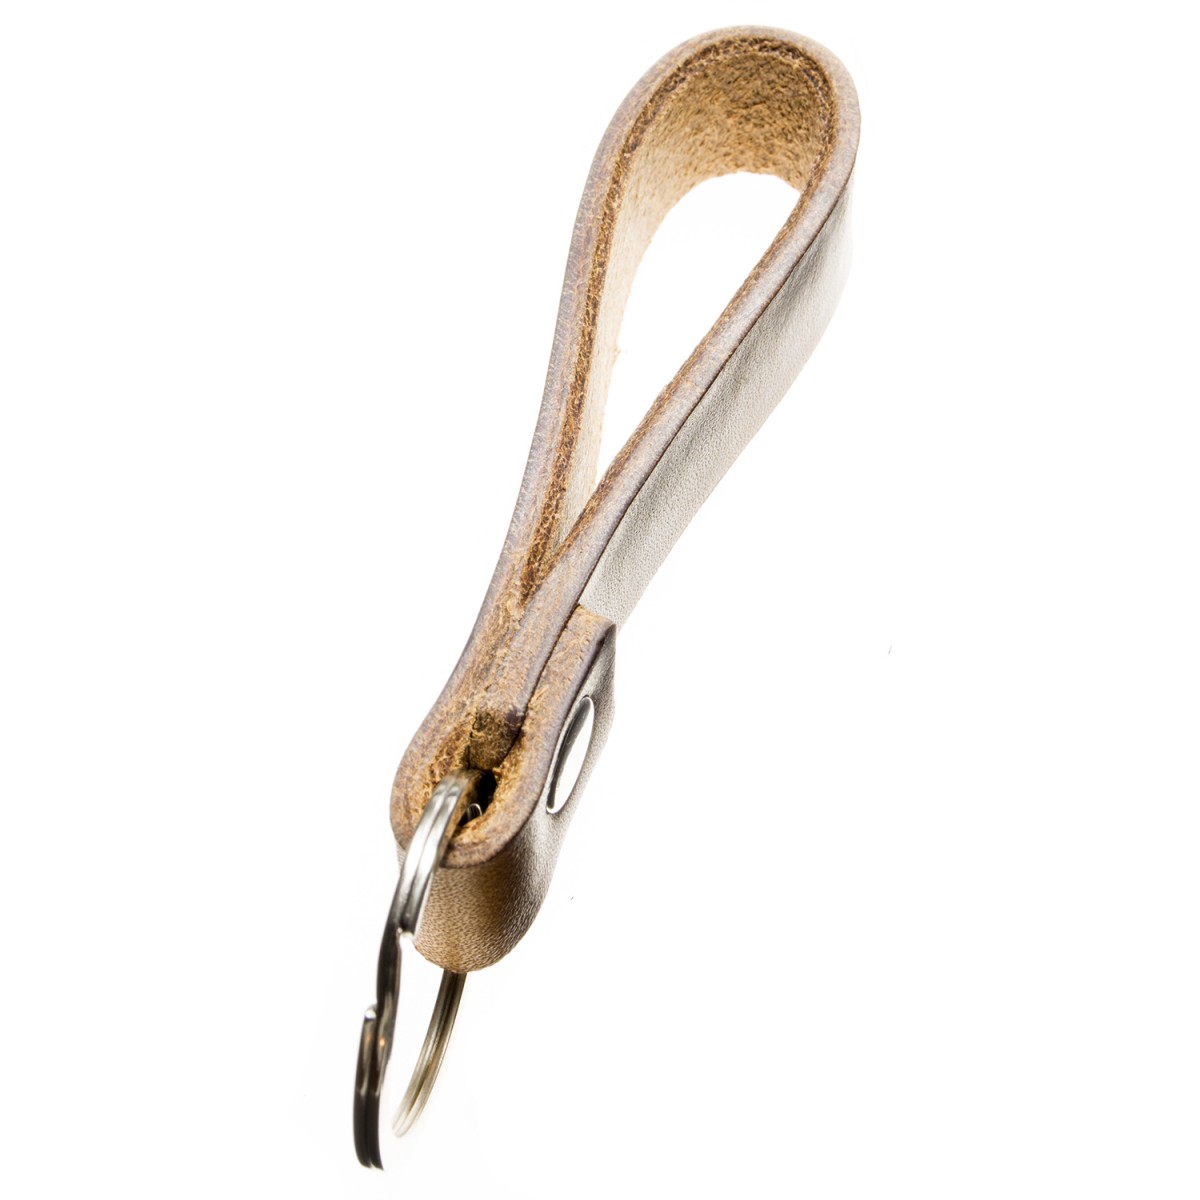 Schlüsselanhänger Fahrradschlüssel pflanzlich gegerbtes Leder Handmade in Germany mit Gravur/Prägung (Fahrrad - Symbol)